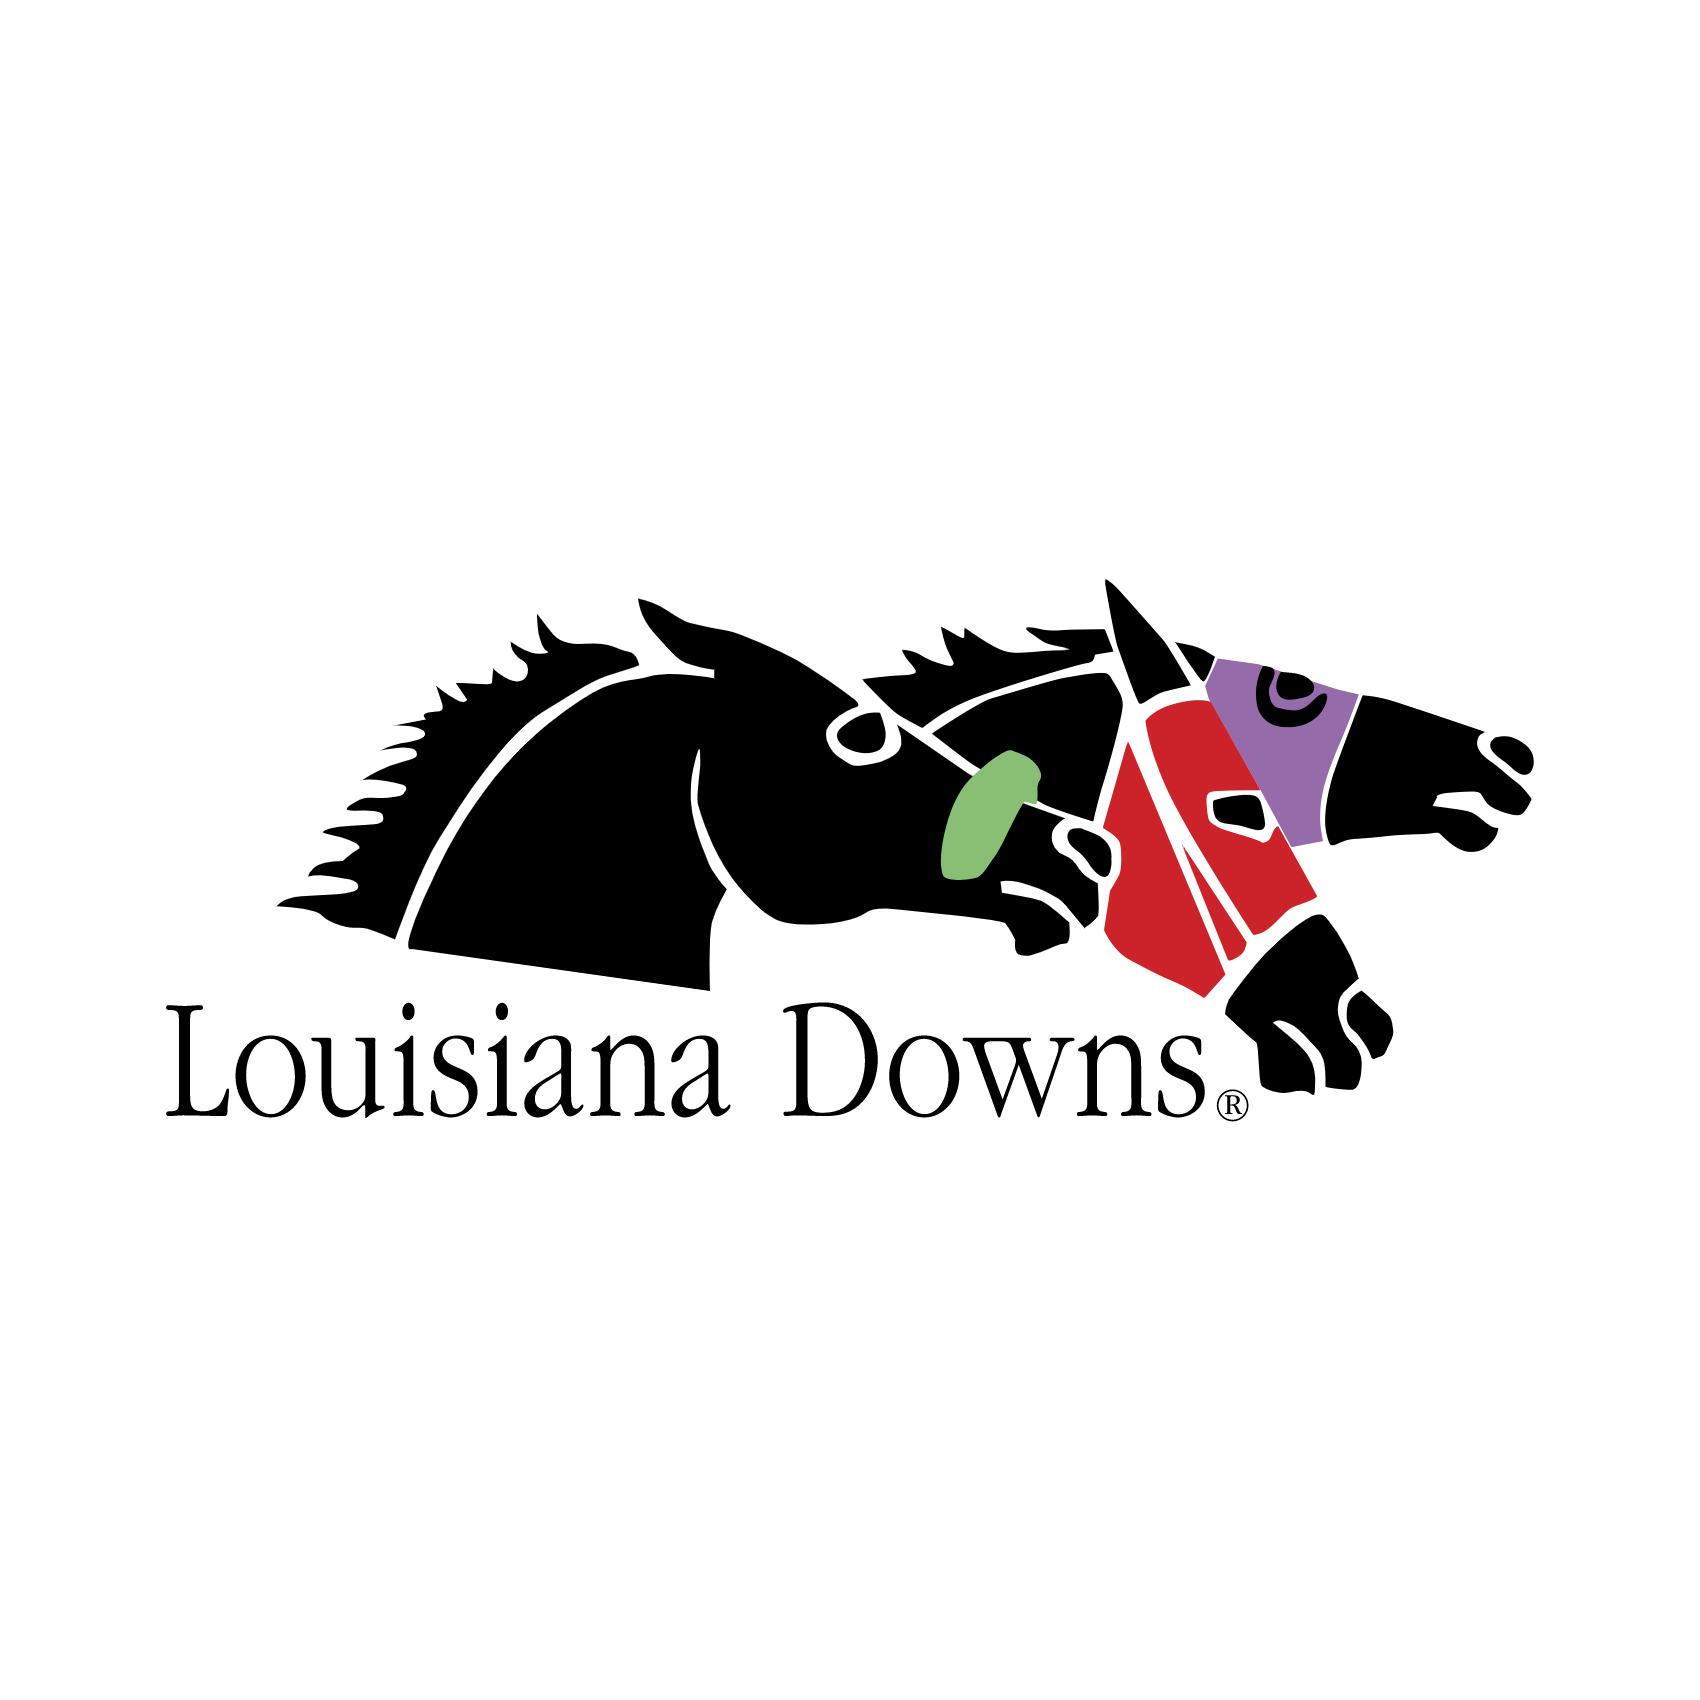 Download Louisiana downs Logo PNG and Vector (PDF, SVG, Ai, EPS) Free